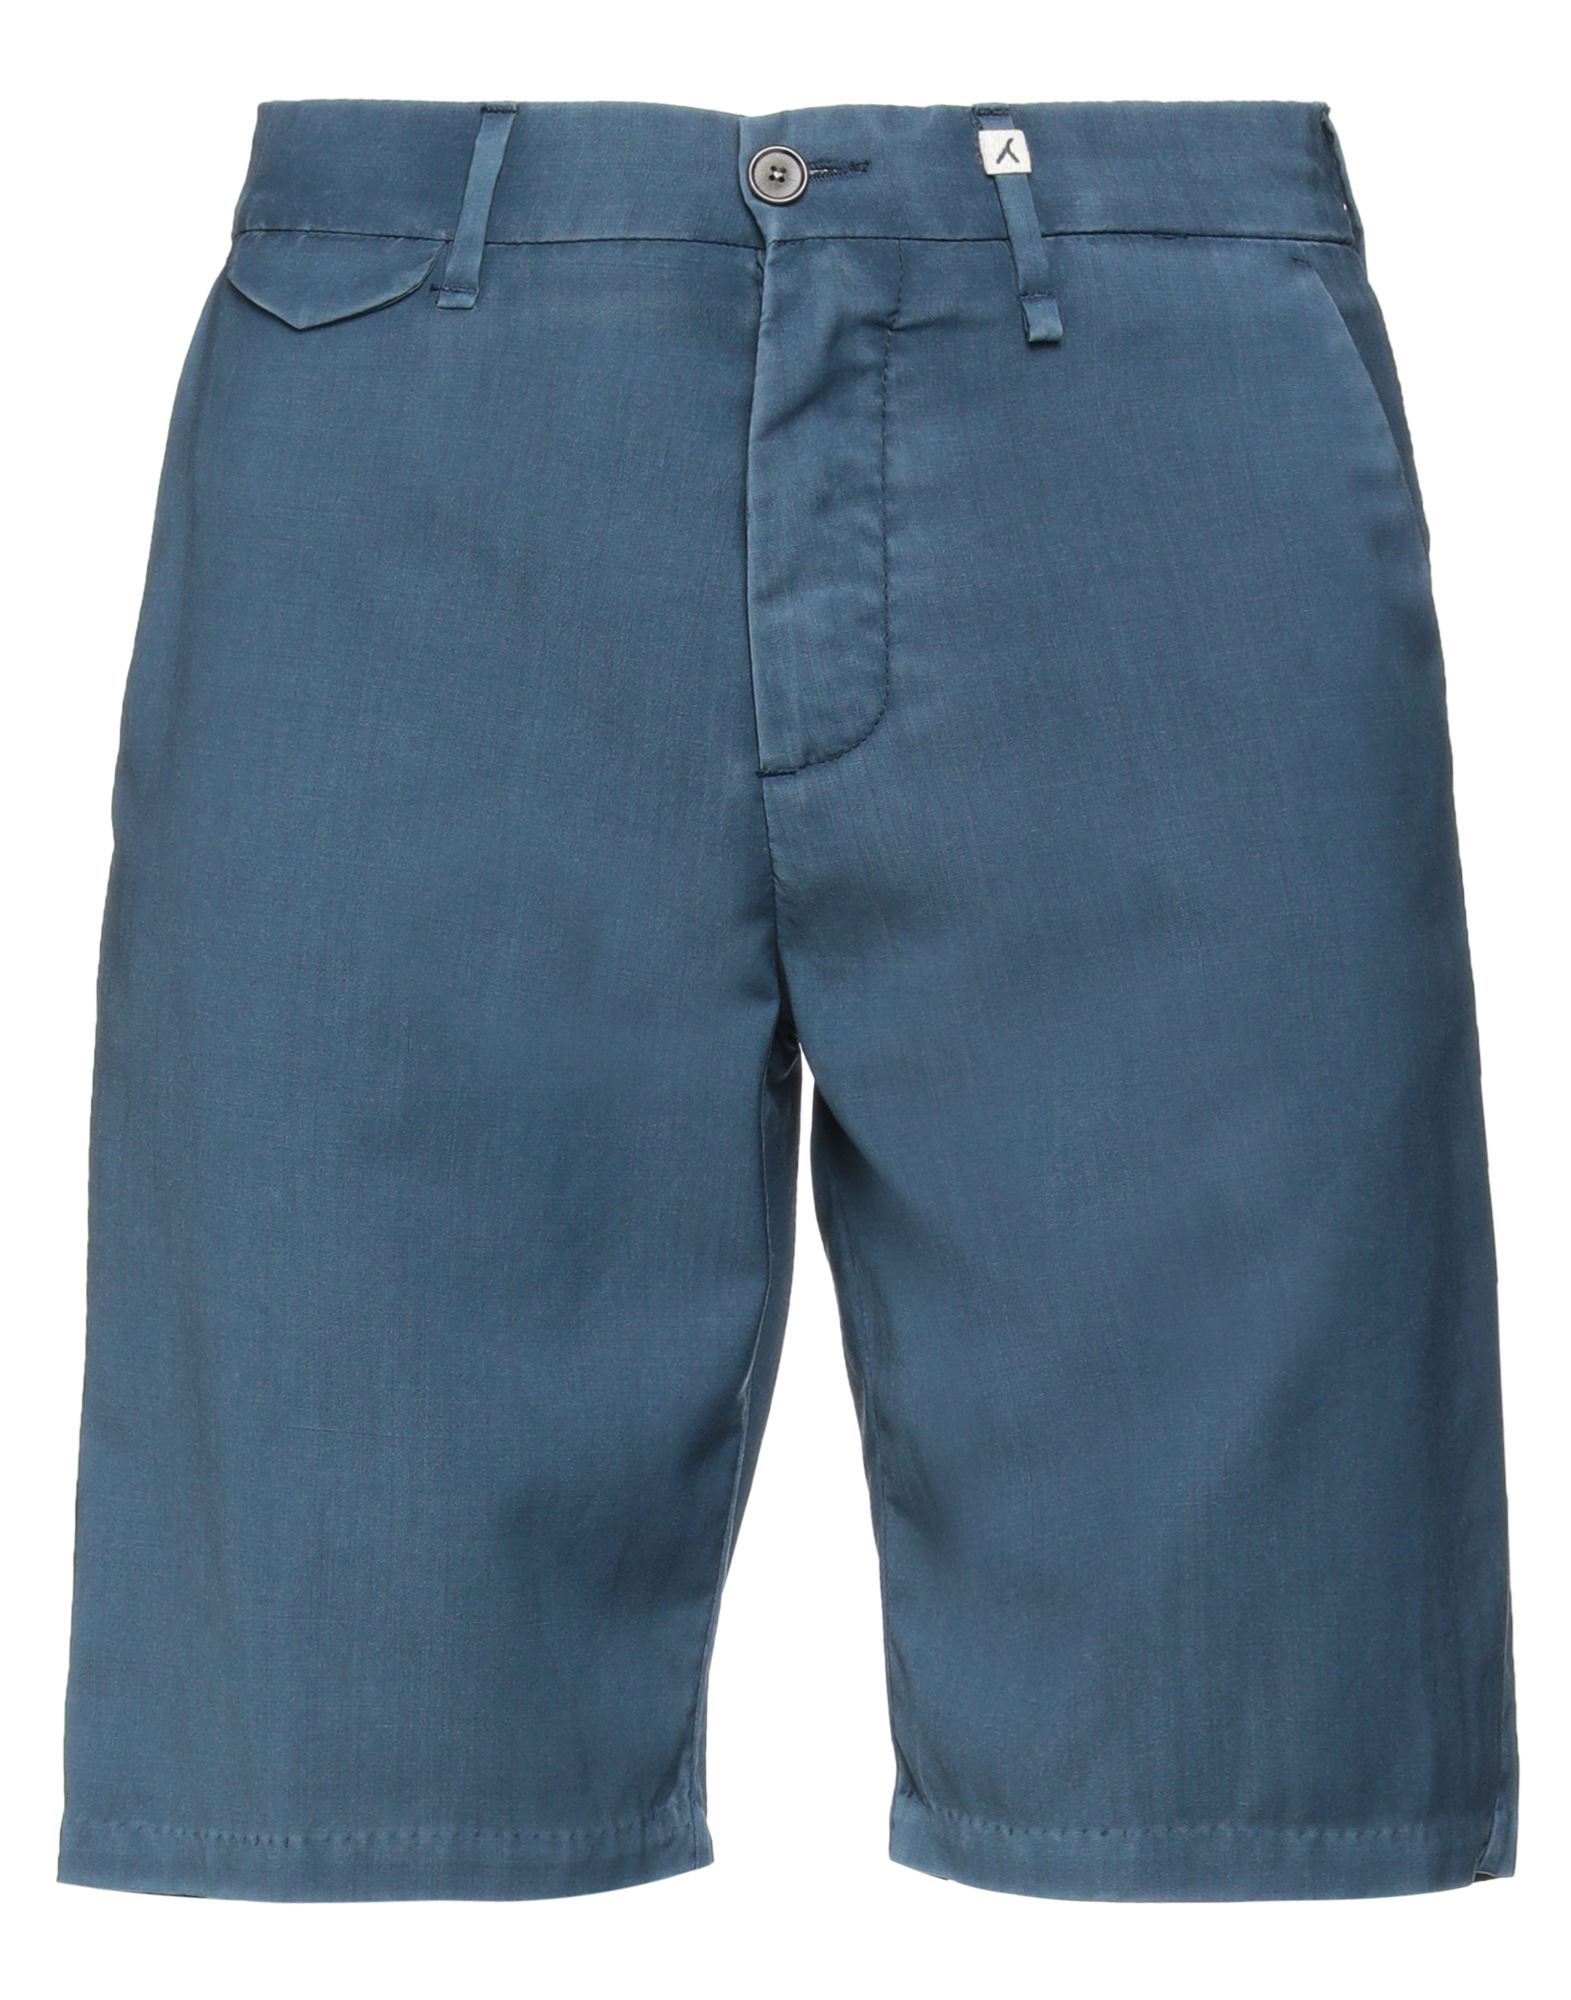 Myths Man Shorts & Bermuda Shorts Slate Blue Size 38 Virgin Wool